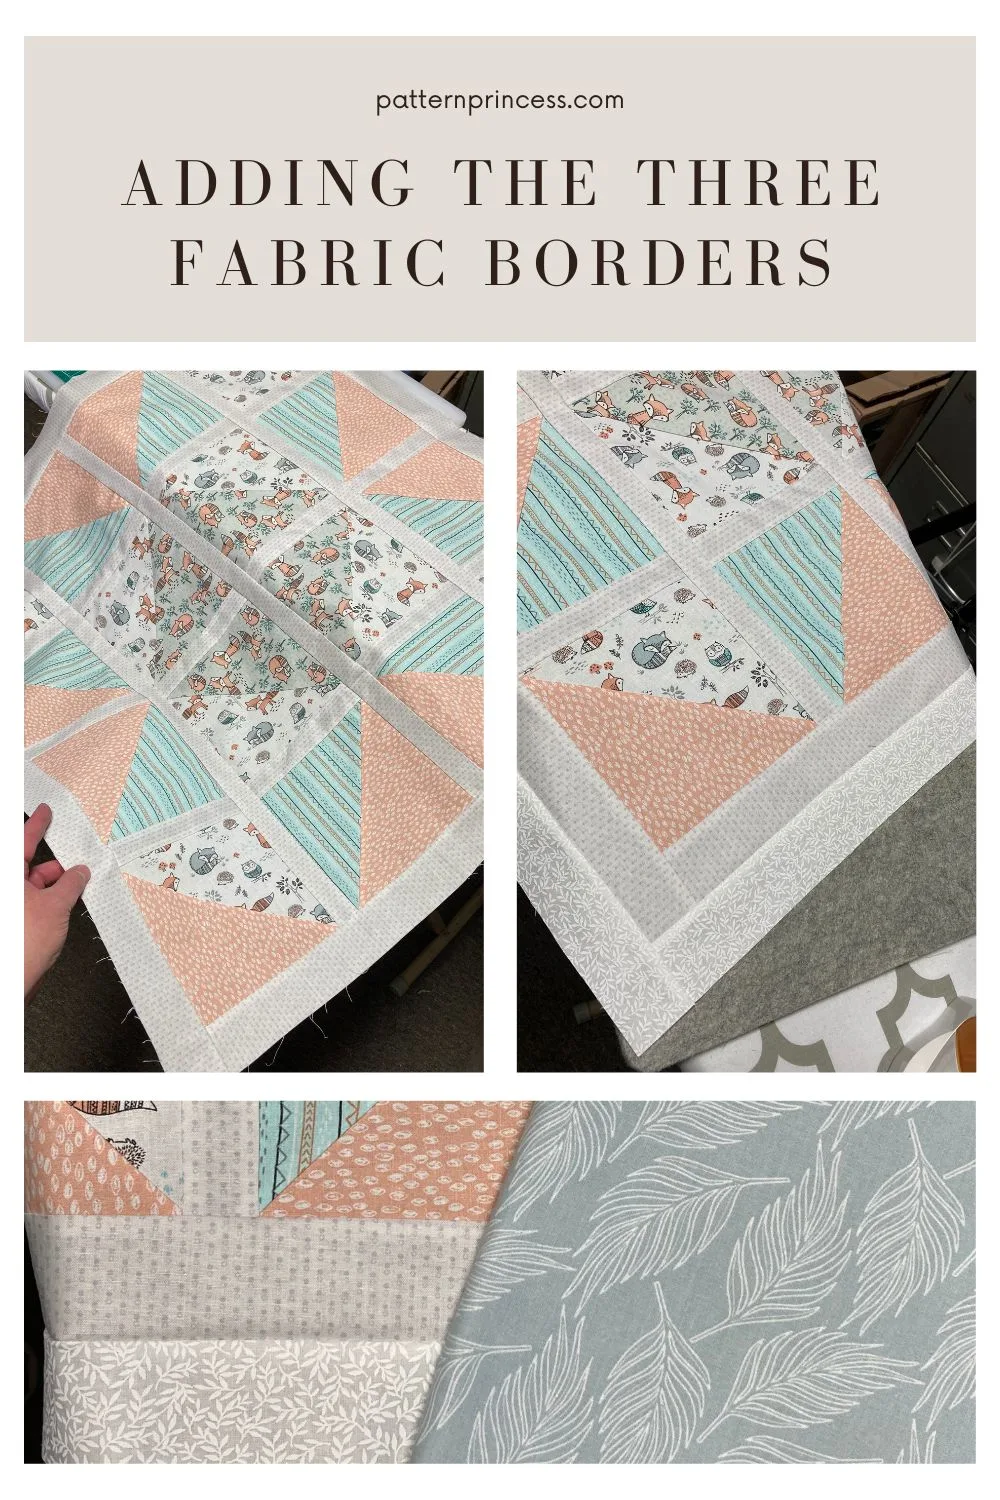 Adding the Three Fabric Borders